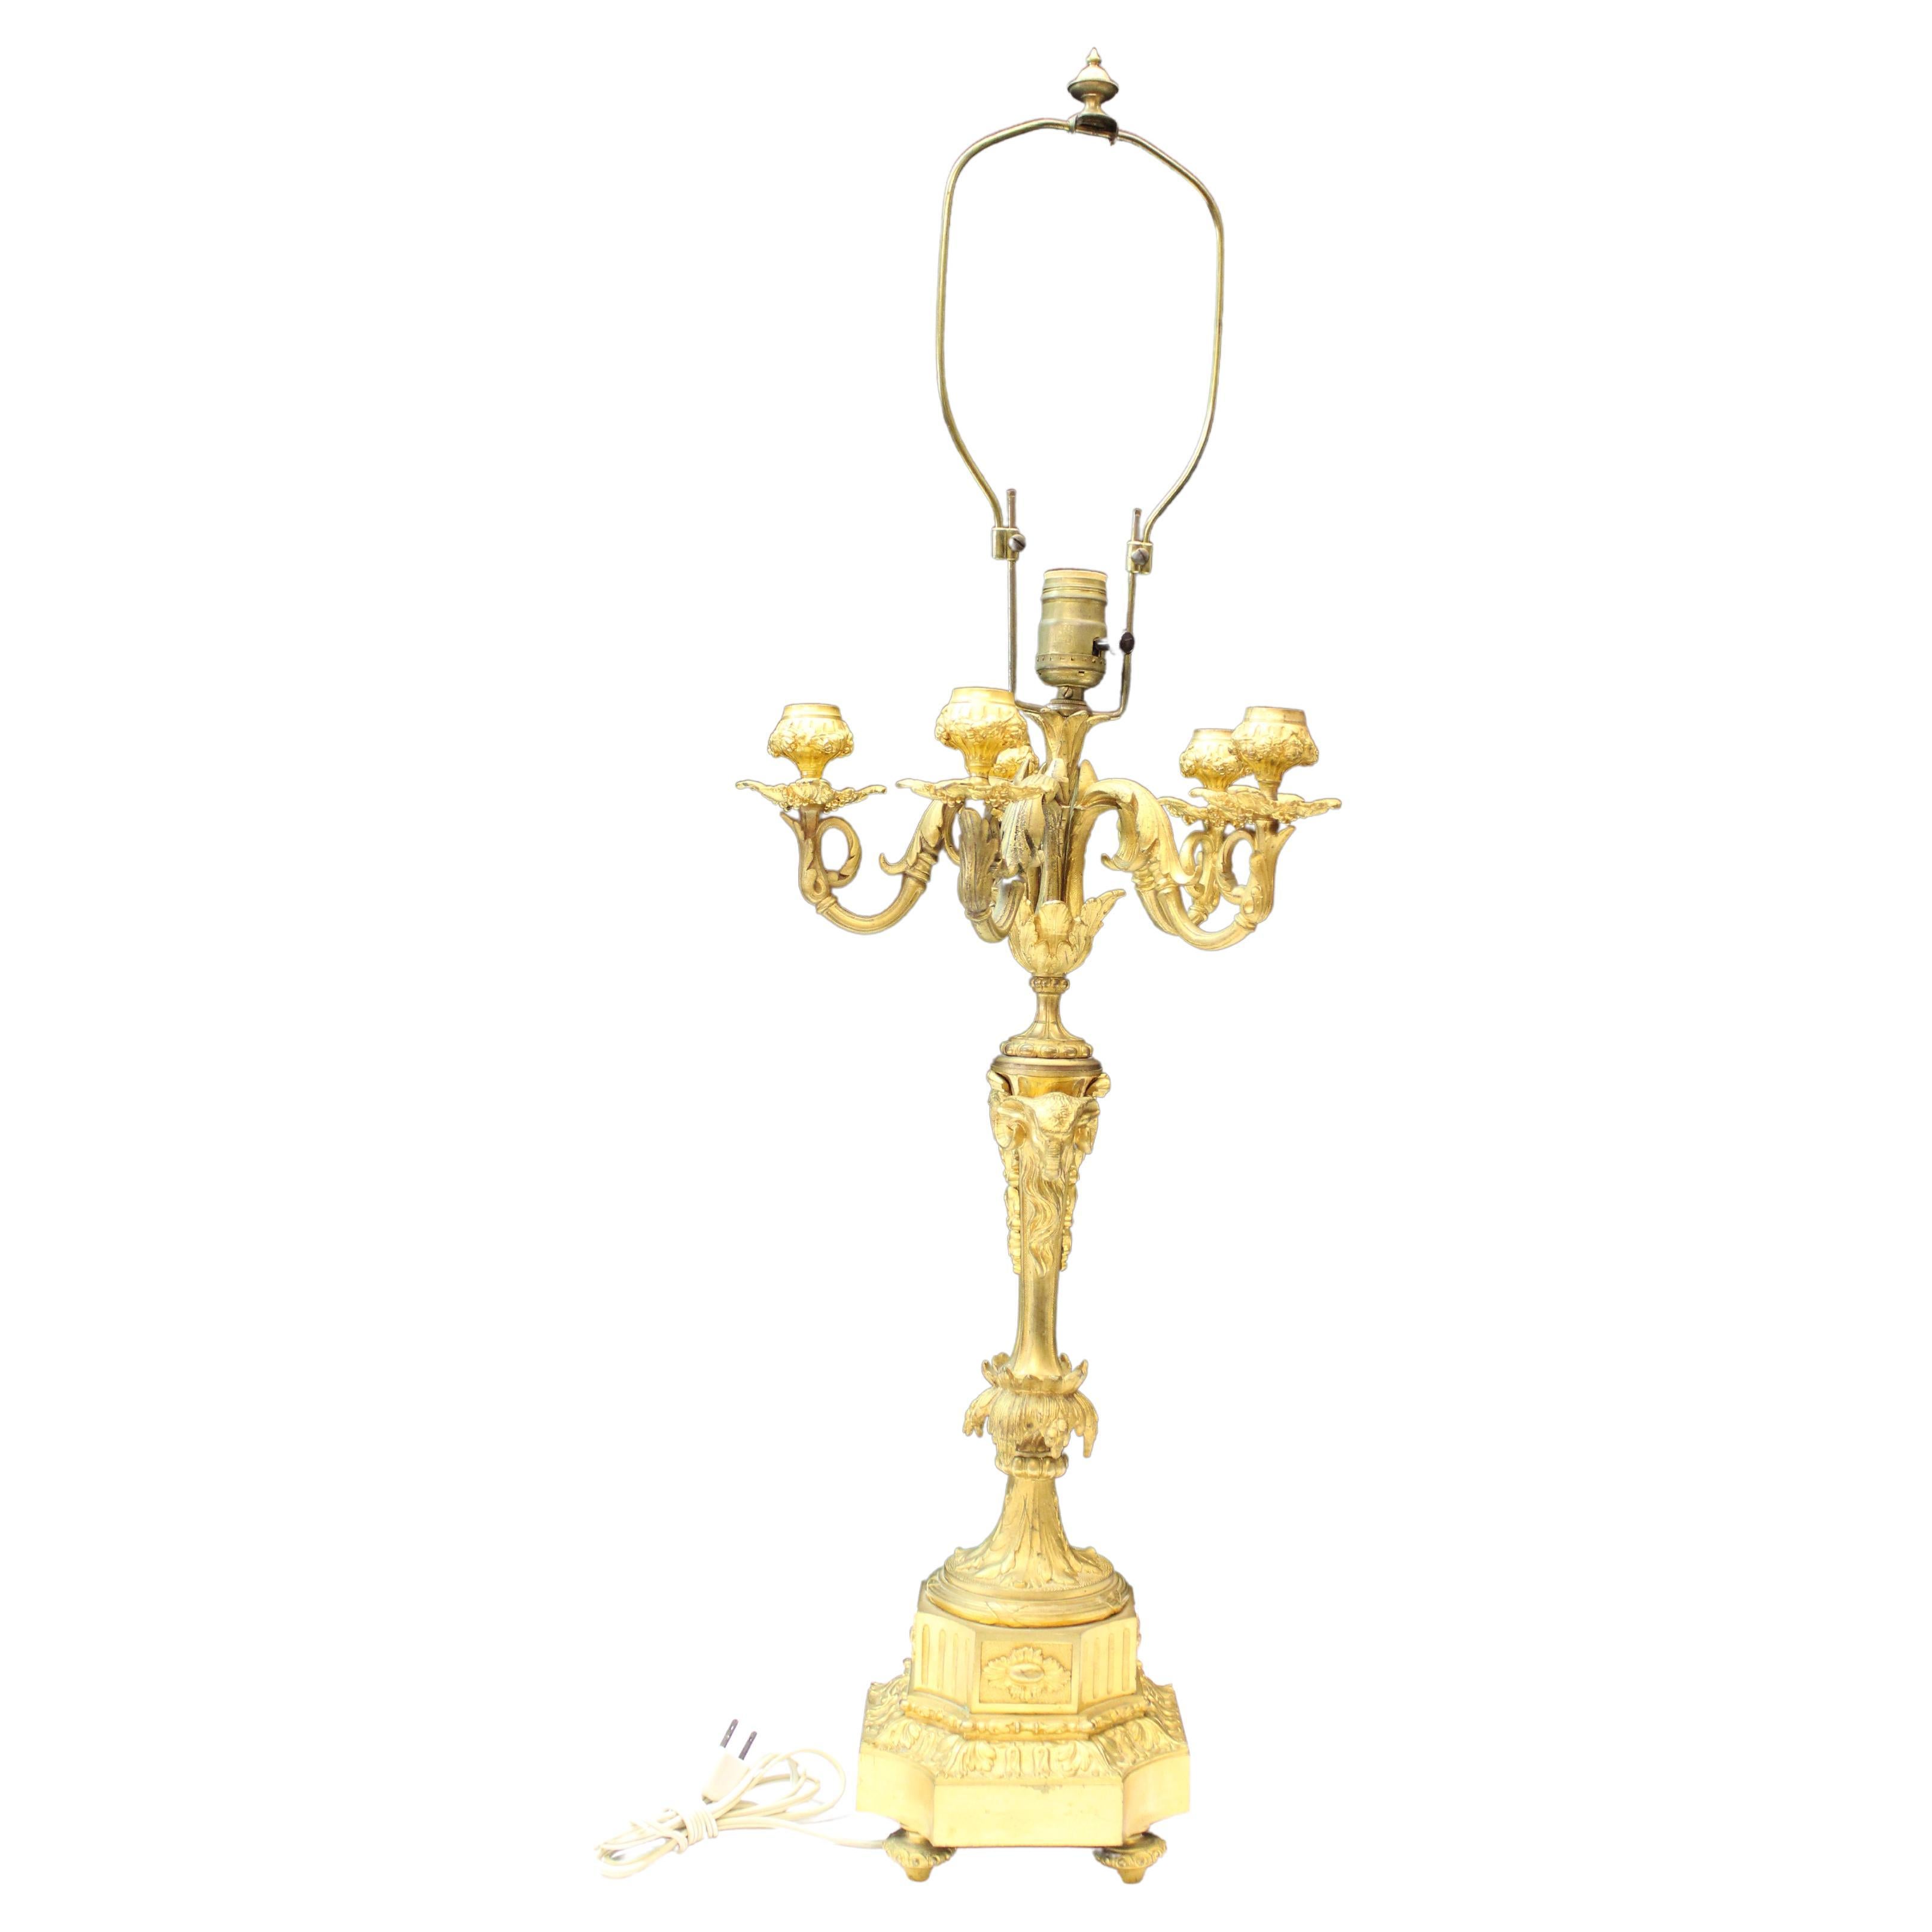 19th Century Gilded Bronze Five-Light Lamp with Ram’s Head Decoration